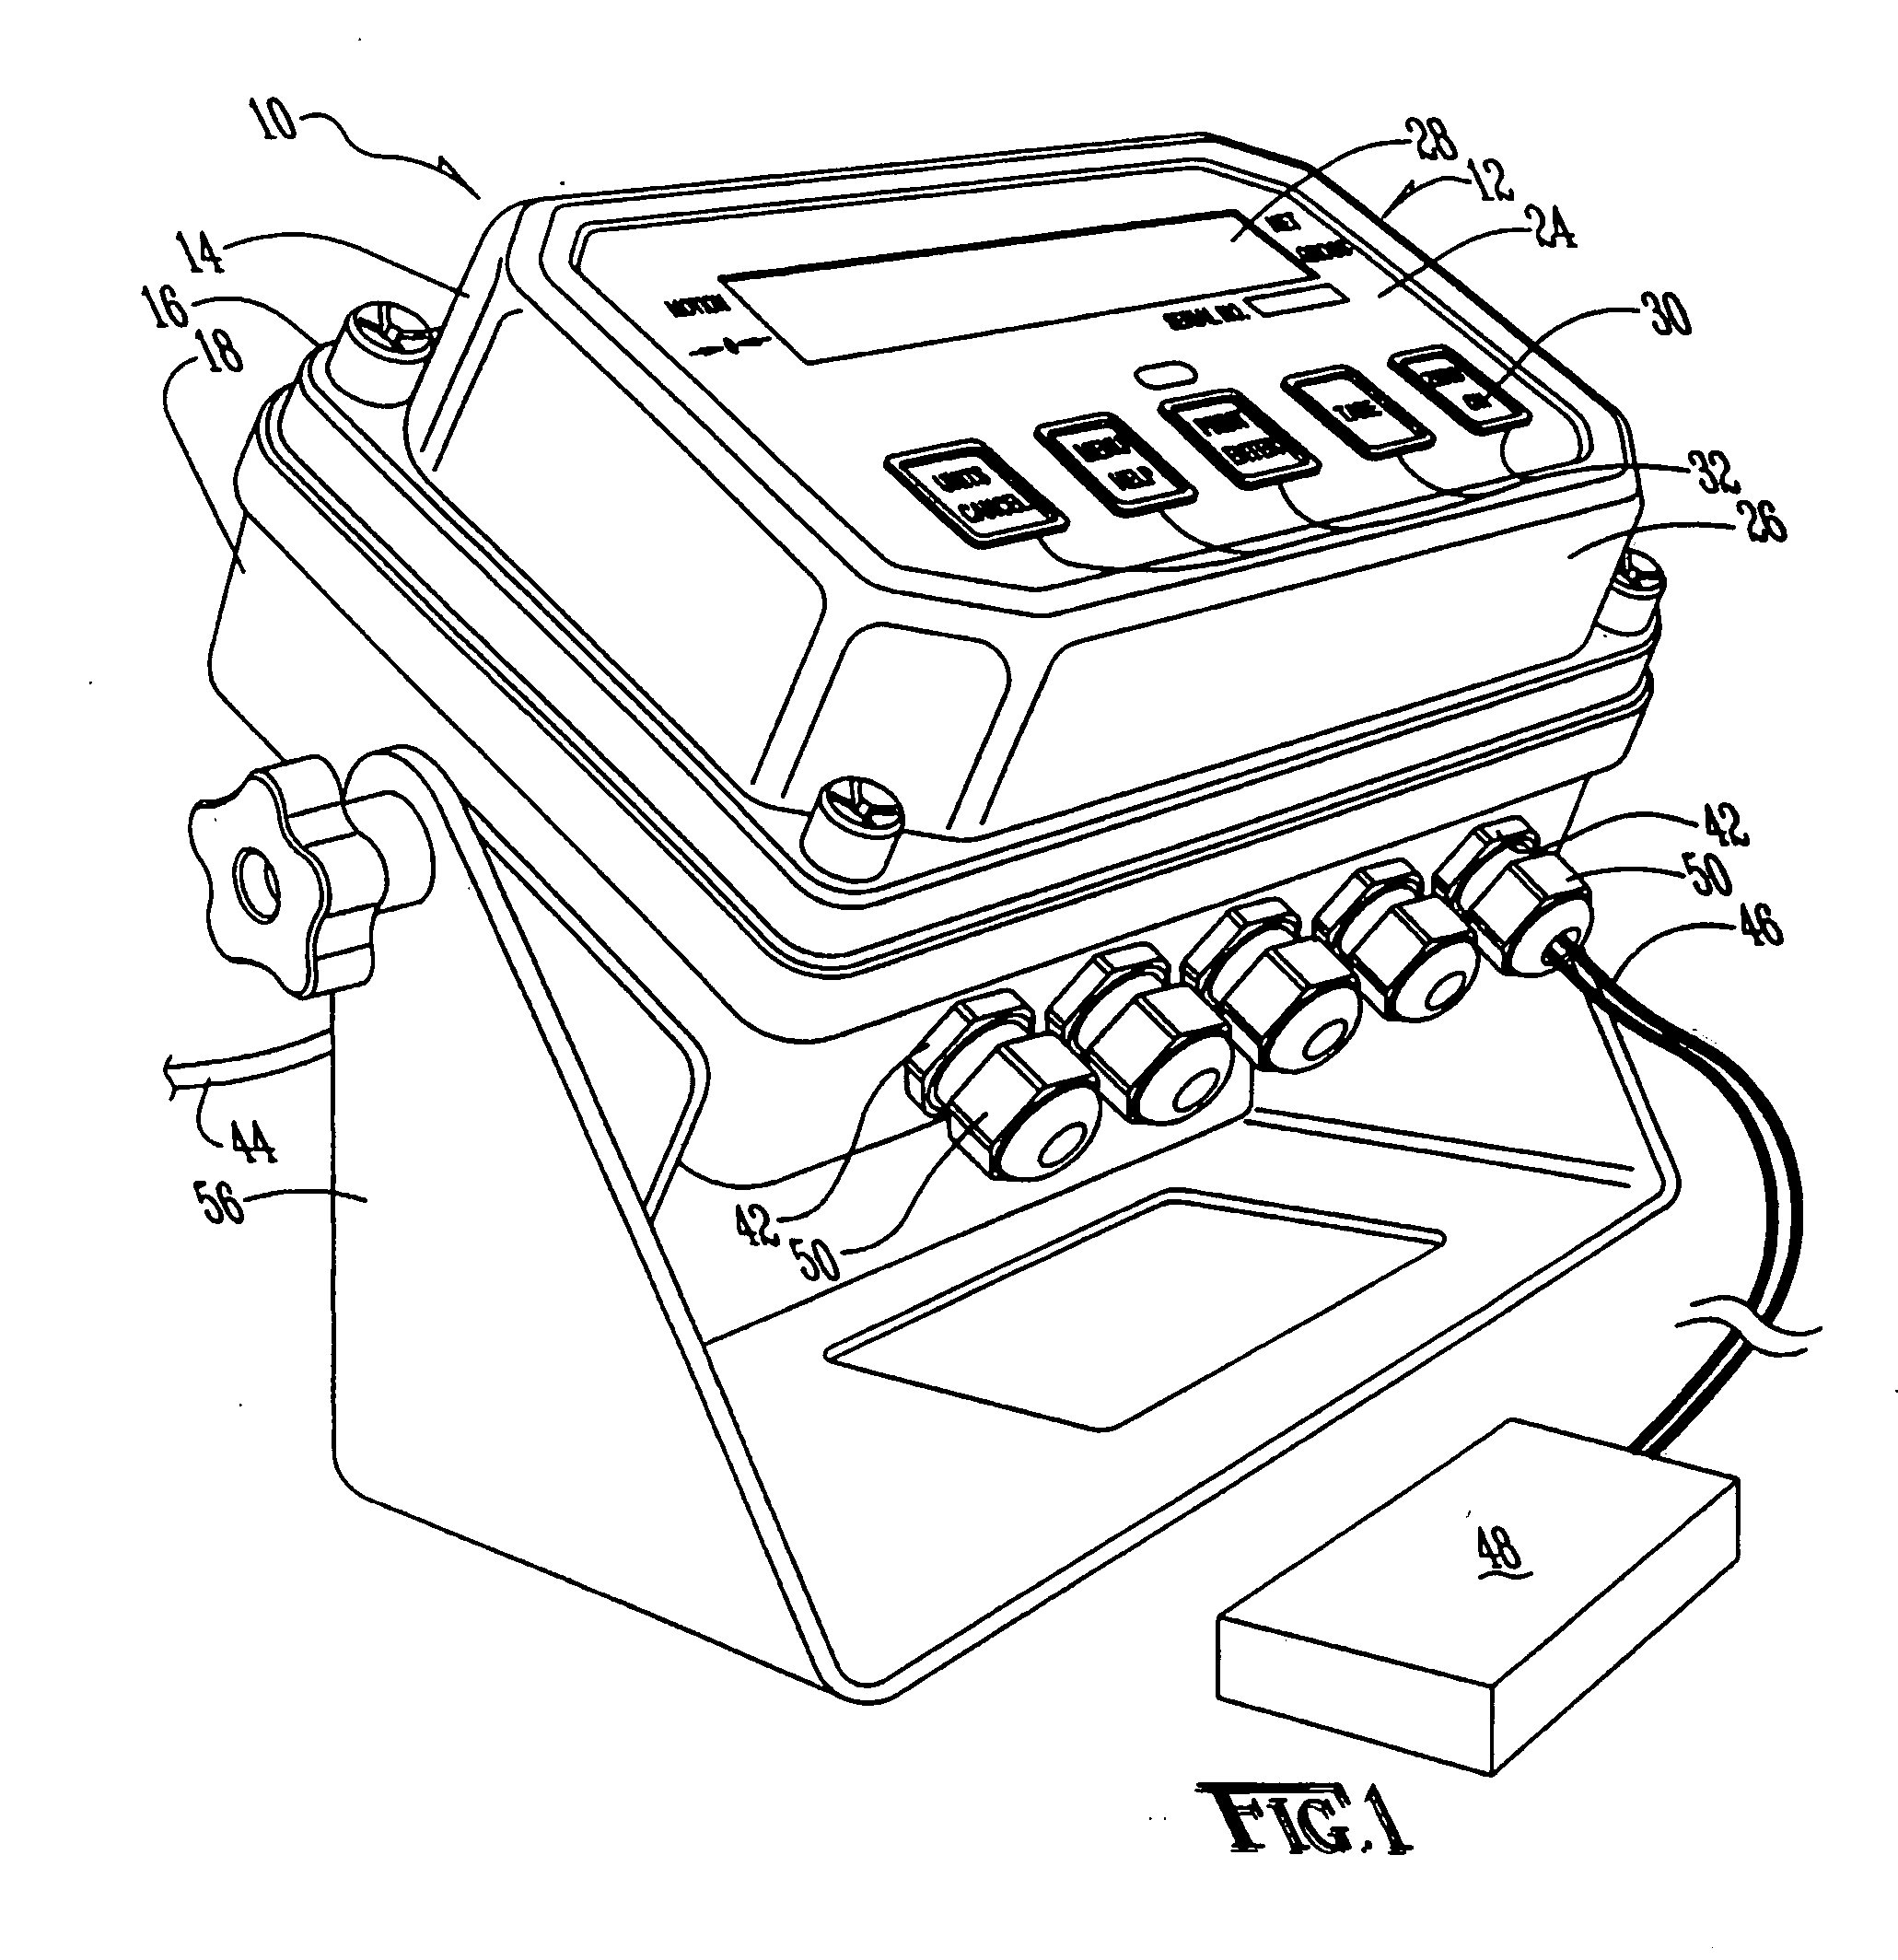 Modular sealed portable digital electronic controller